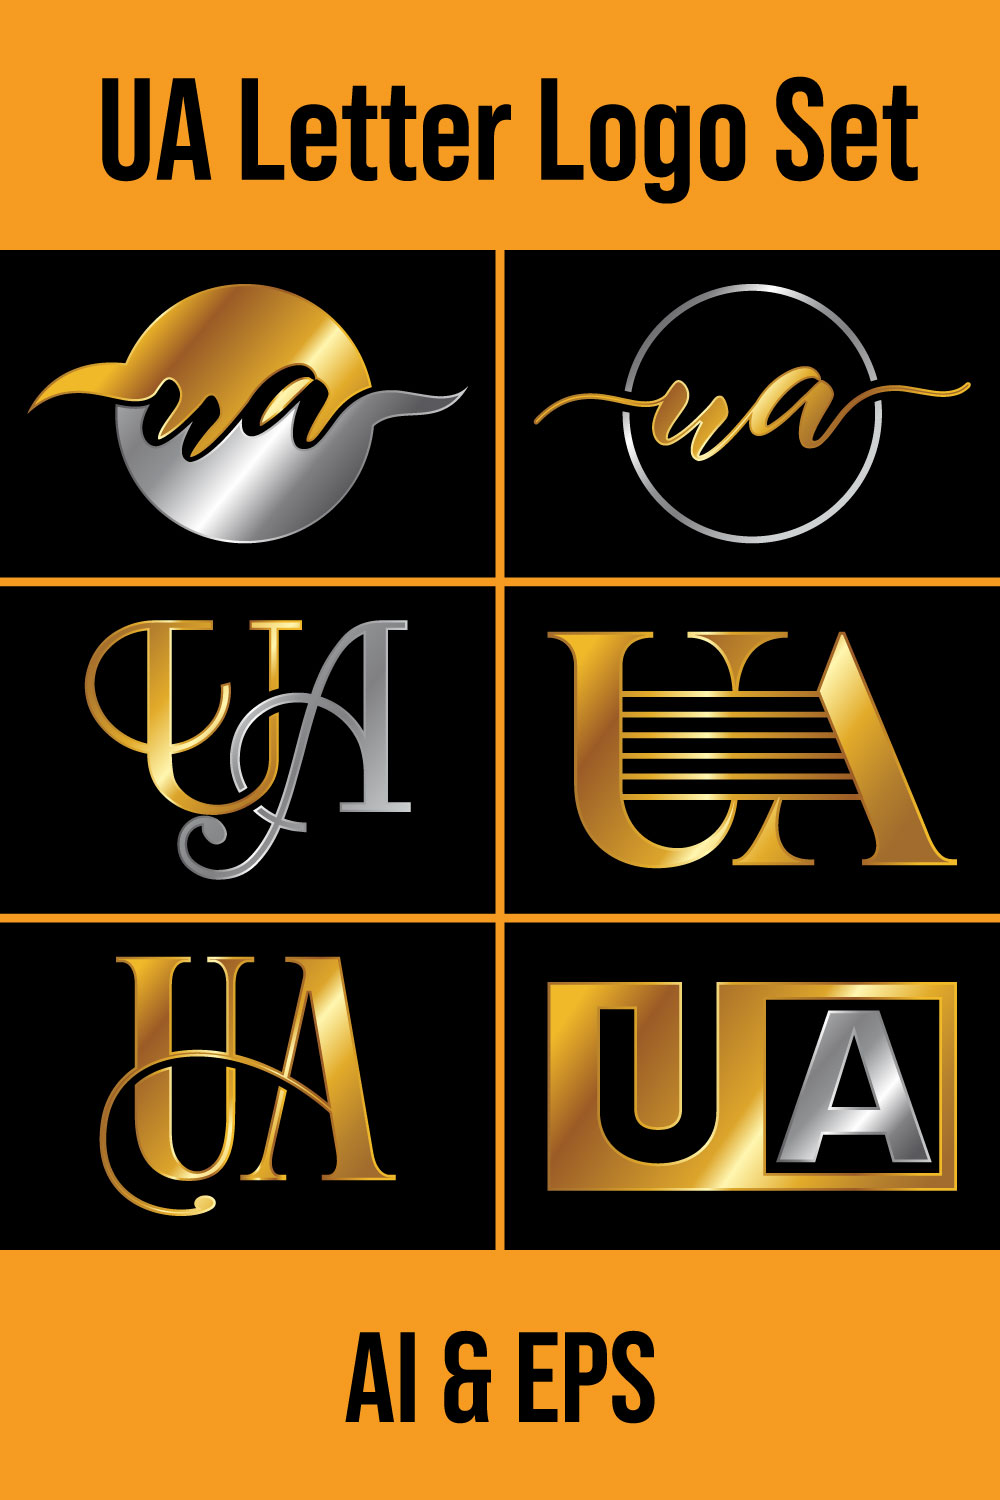 Ua letter logo Vectors & Illustrations for Free Download | Freepik